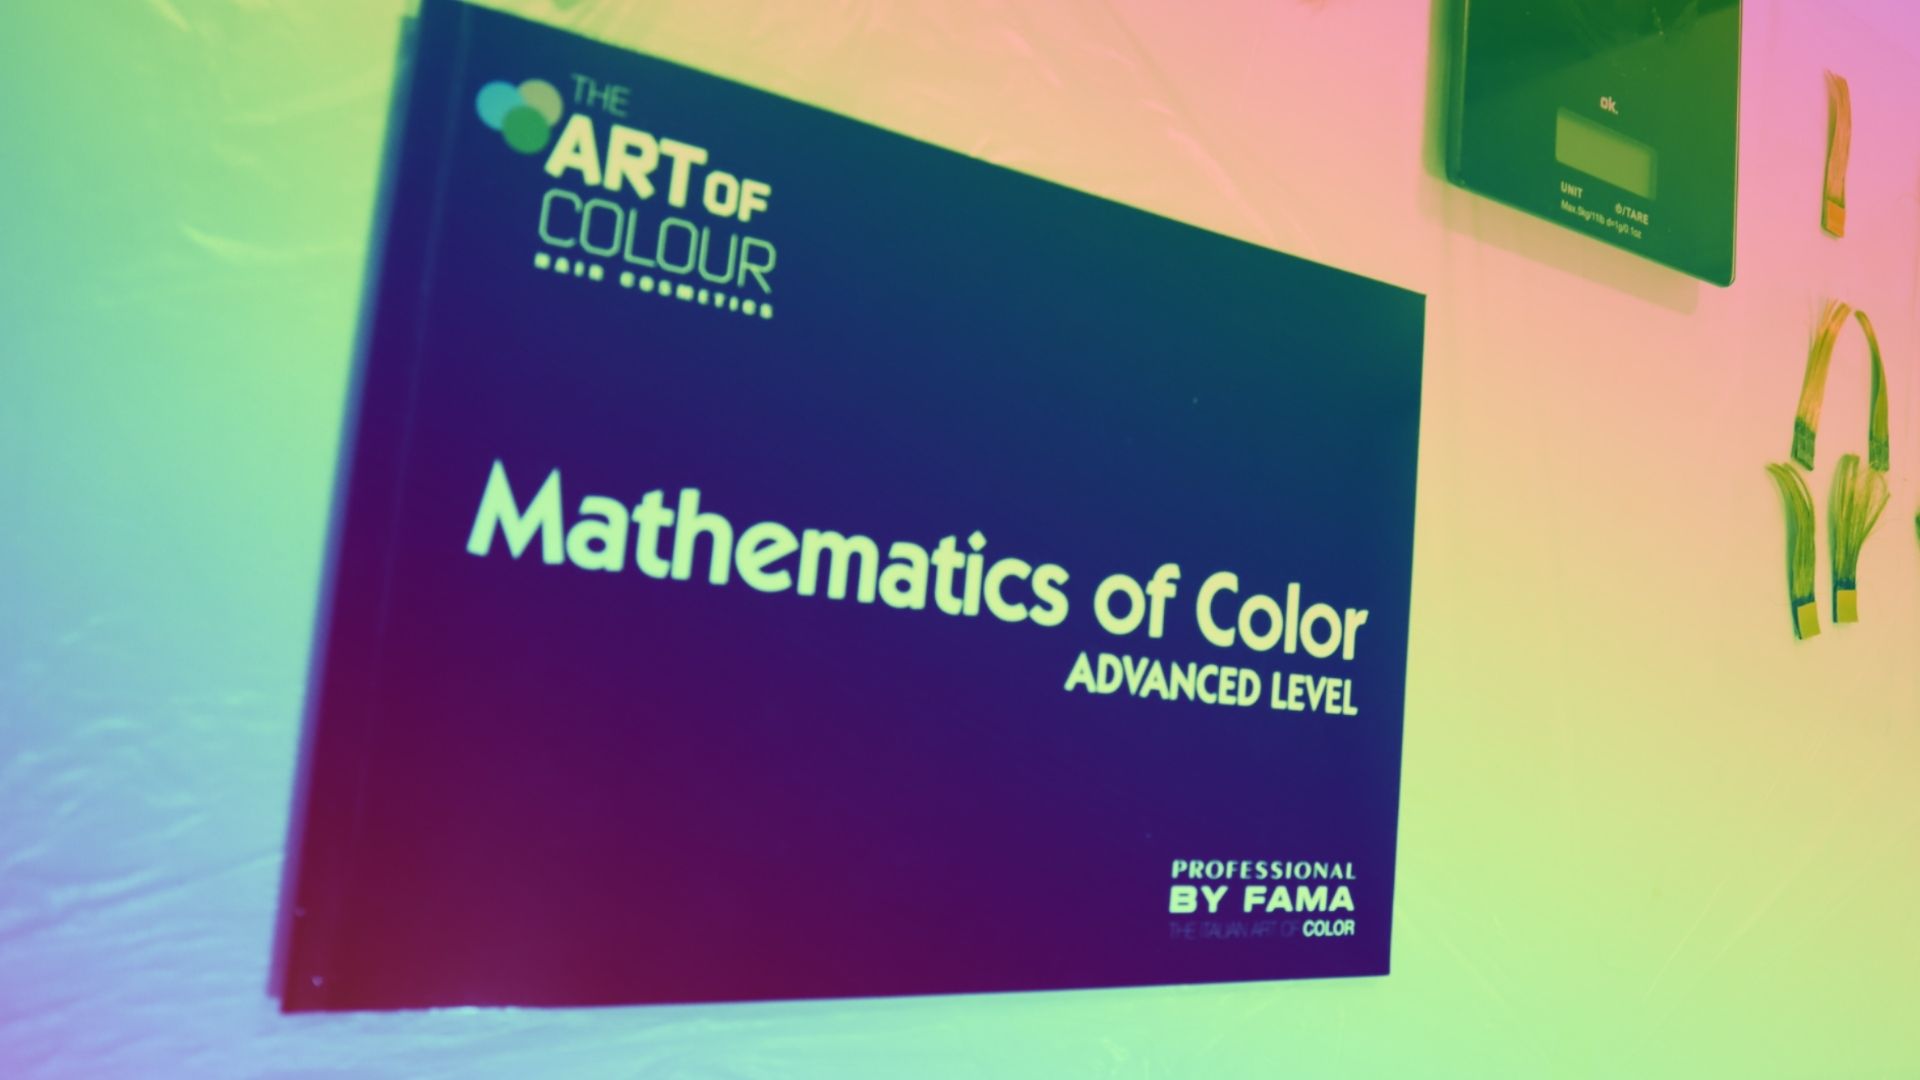 Mathematics of color